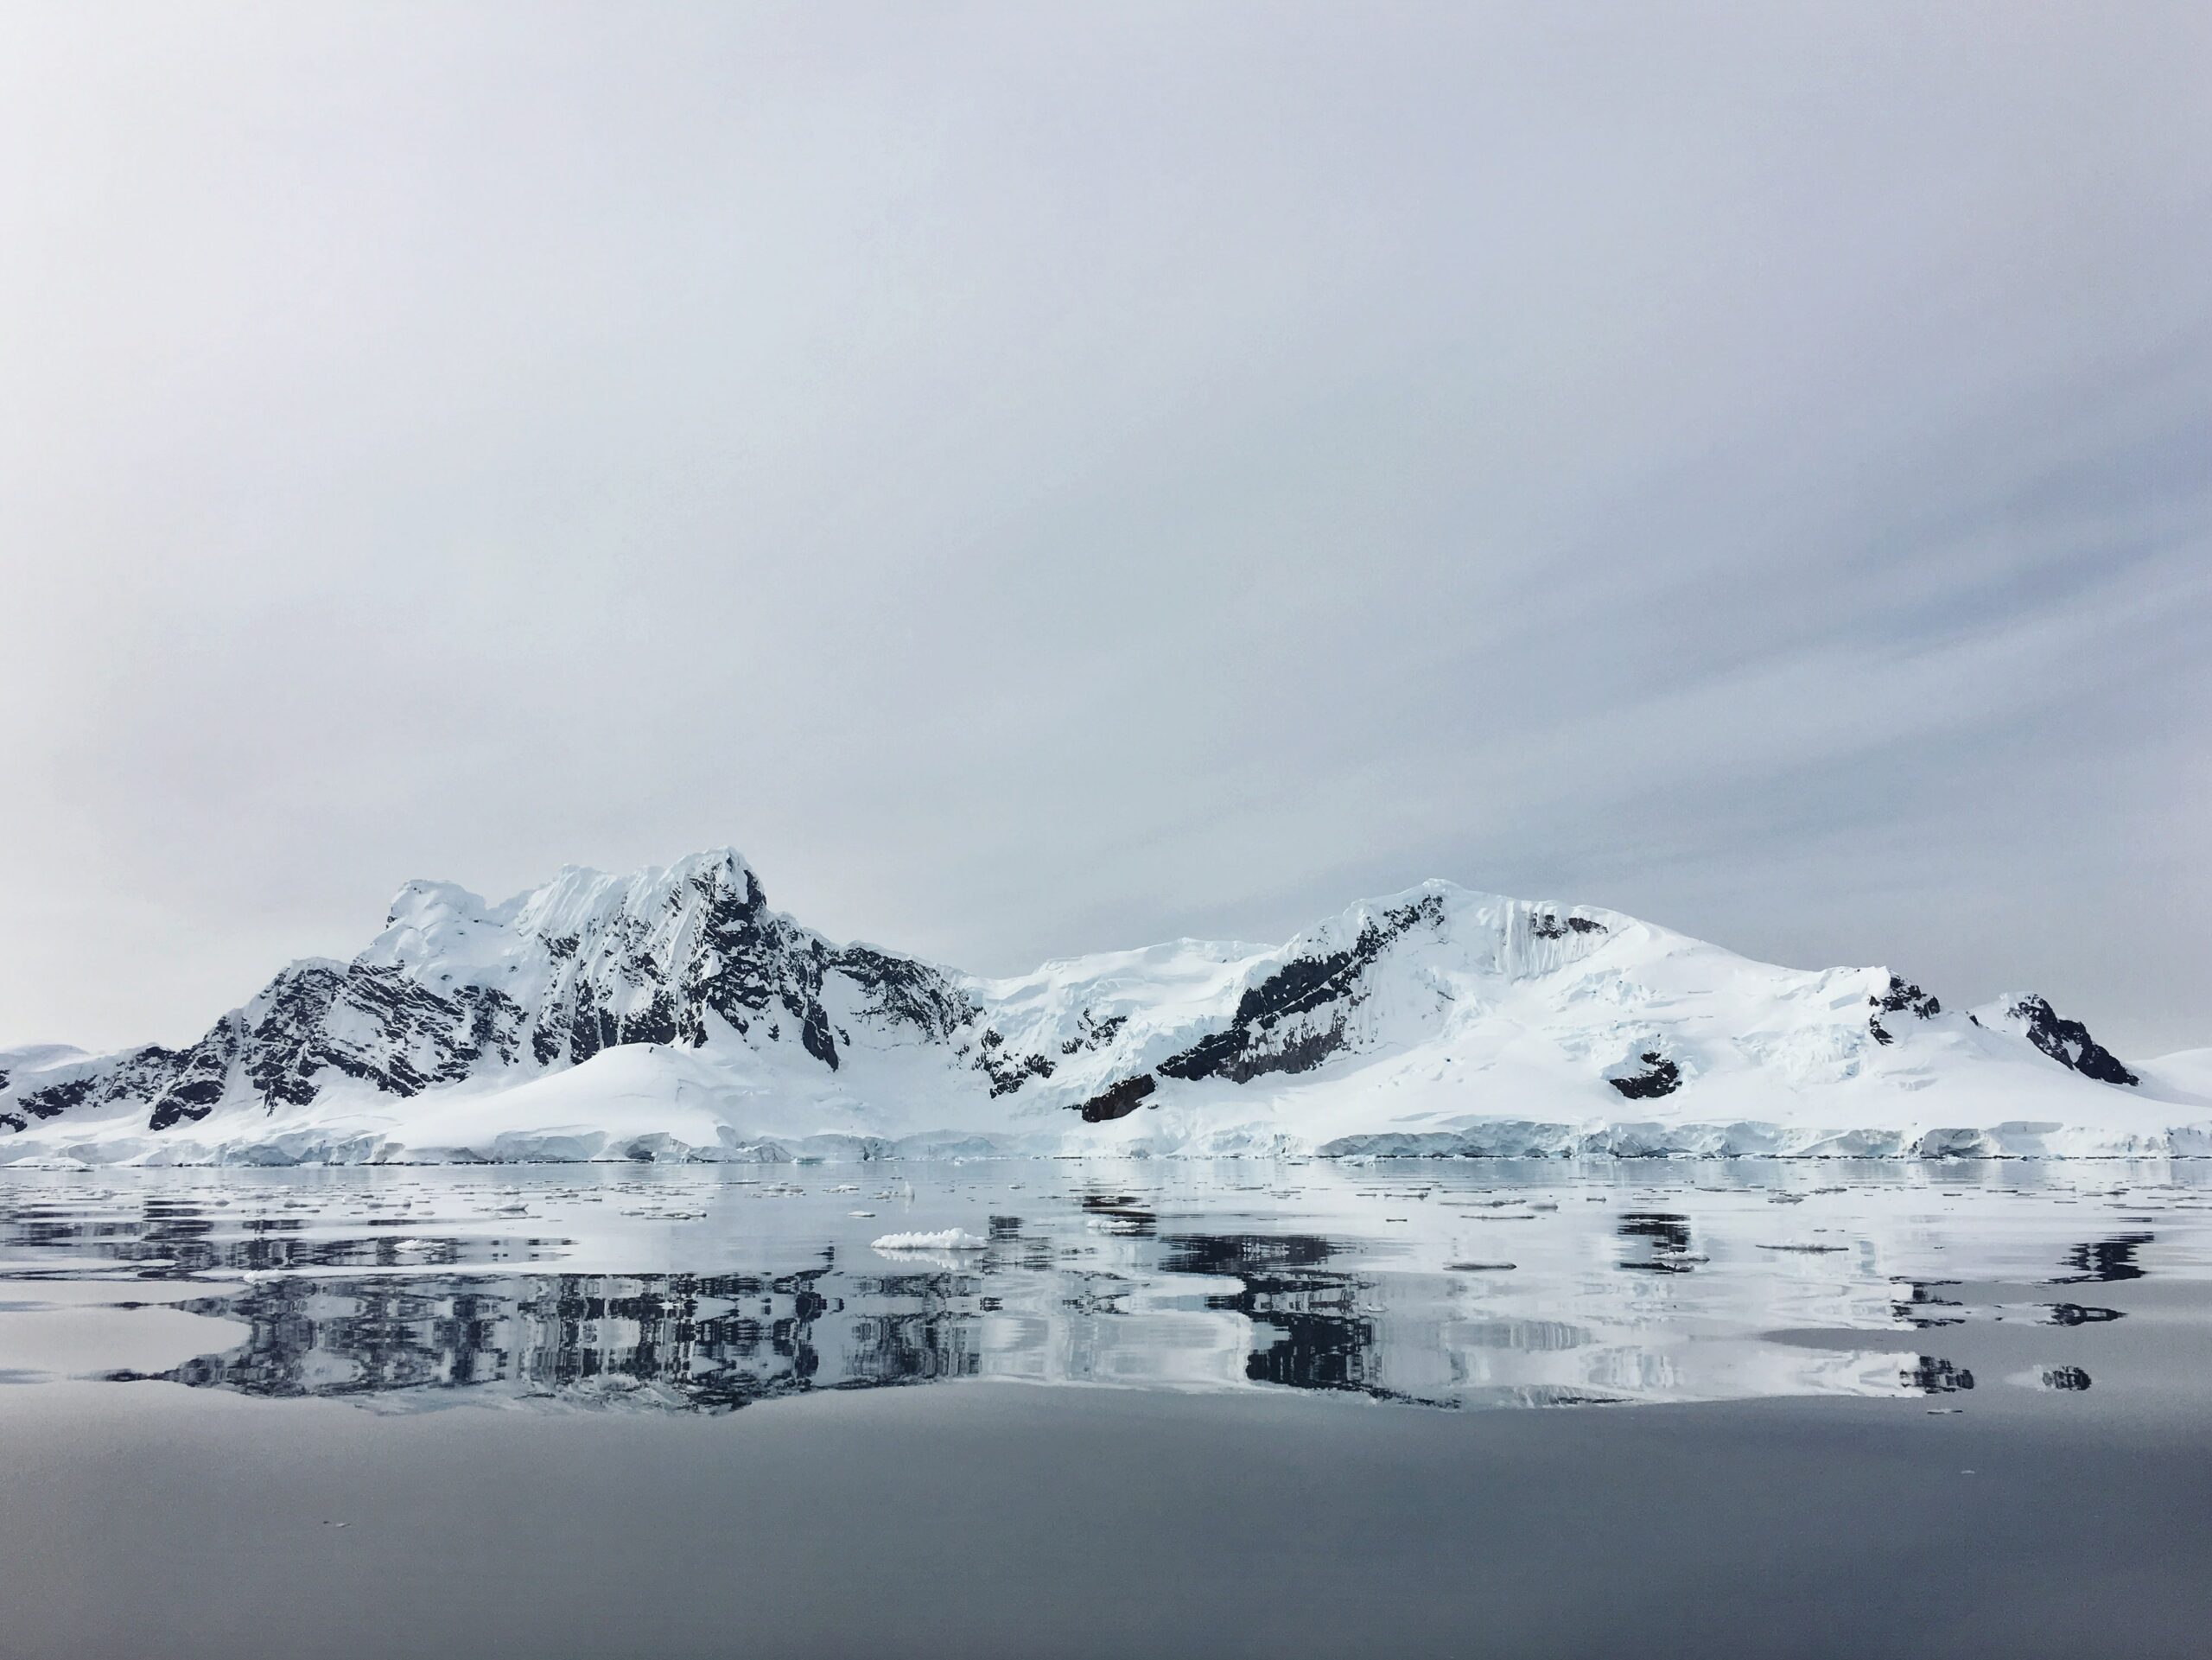 Progressive new alliance seeks personhood status for Antarctica